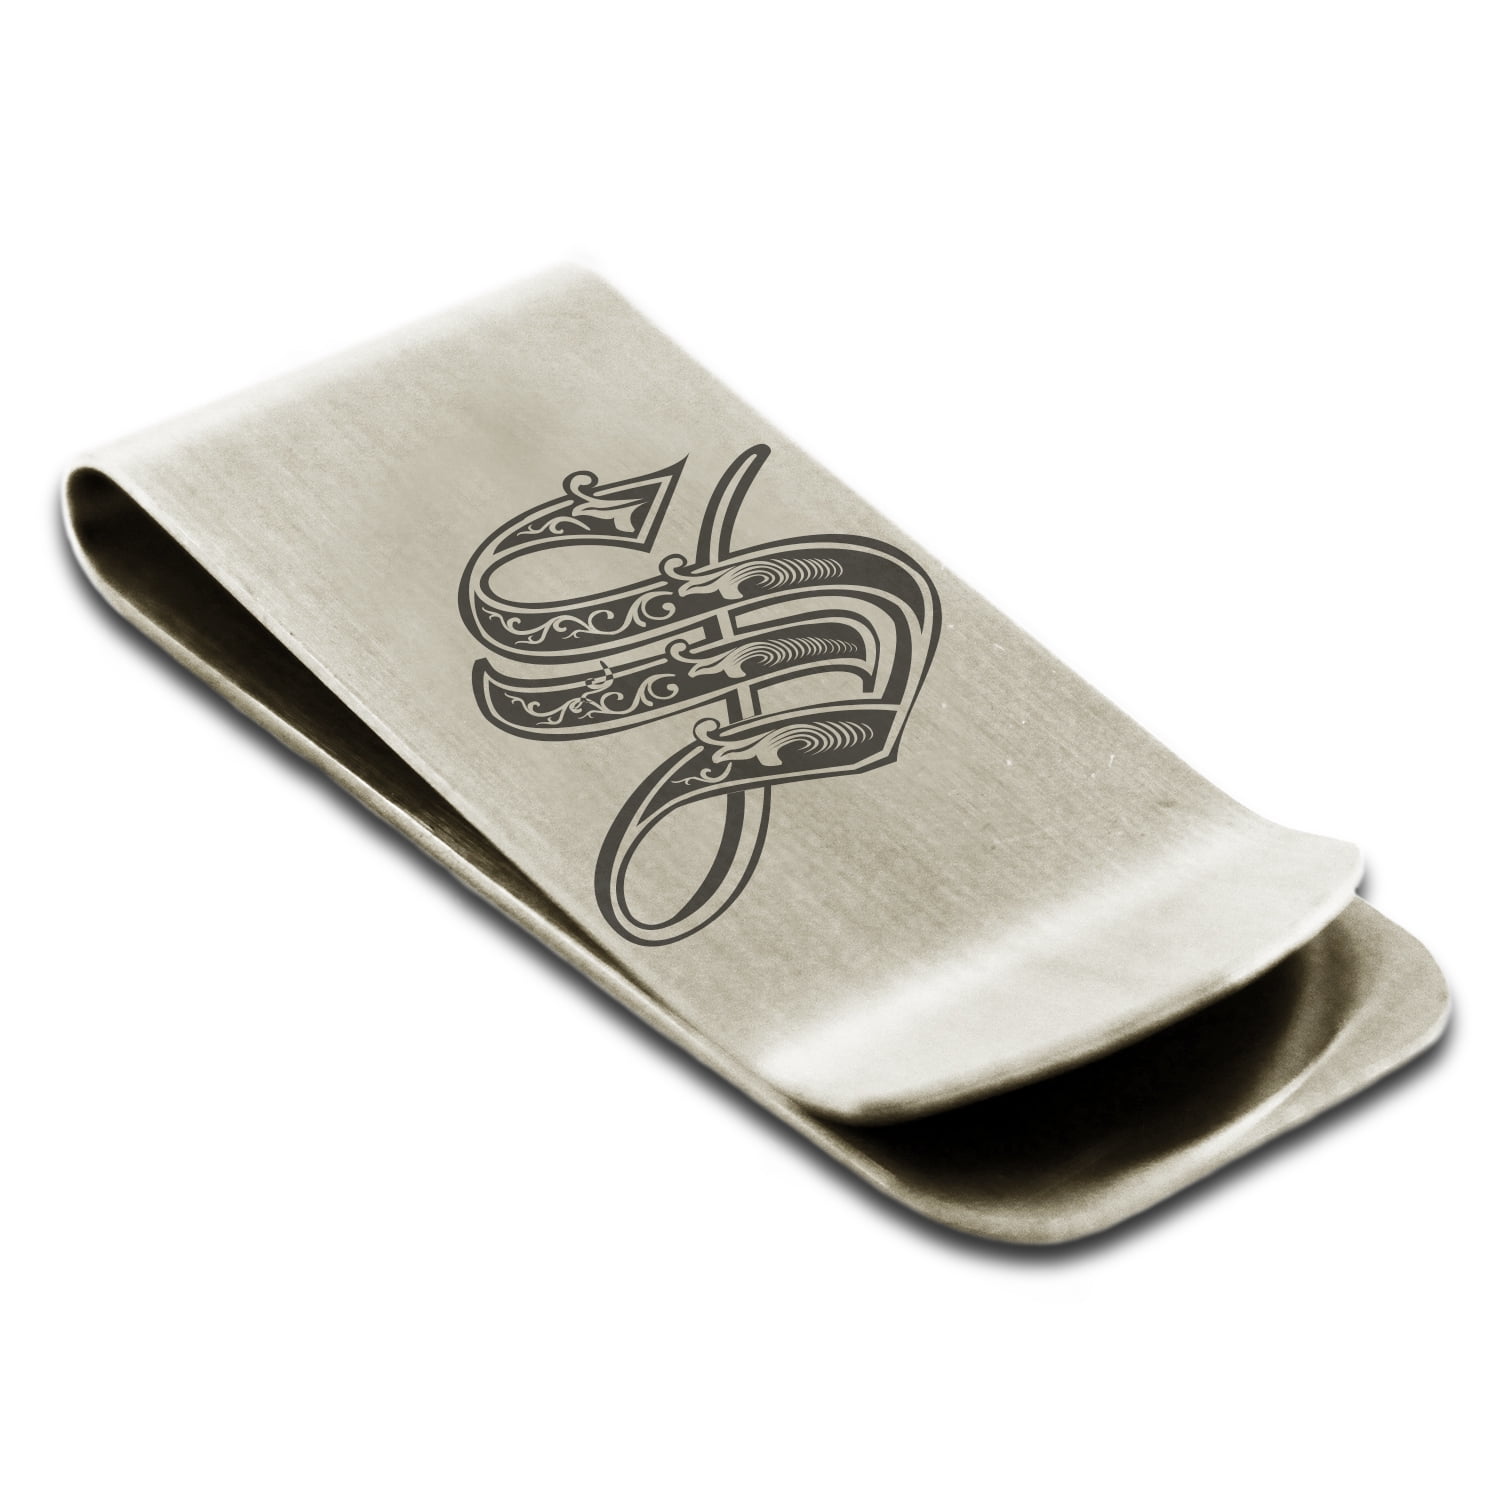 " S " MONOGRAM GOLD Tone INITIAL Letter design Stainless Steel-Metal Money Clip 